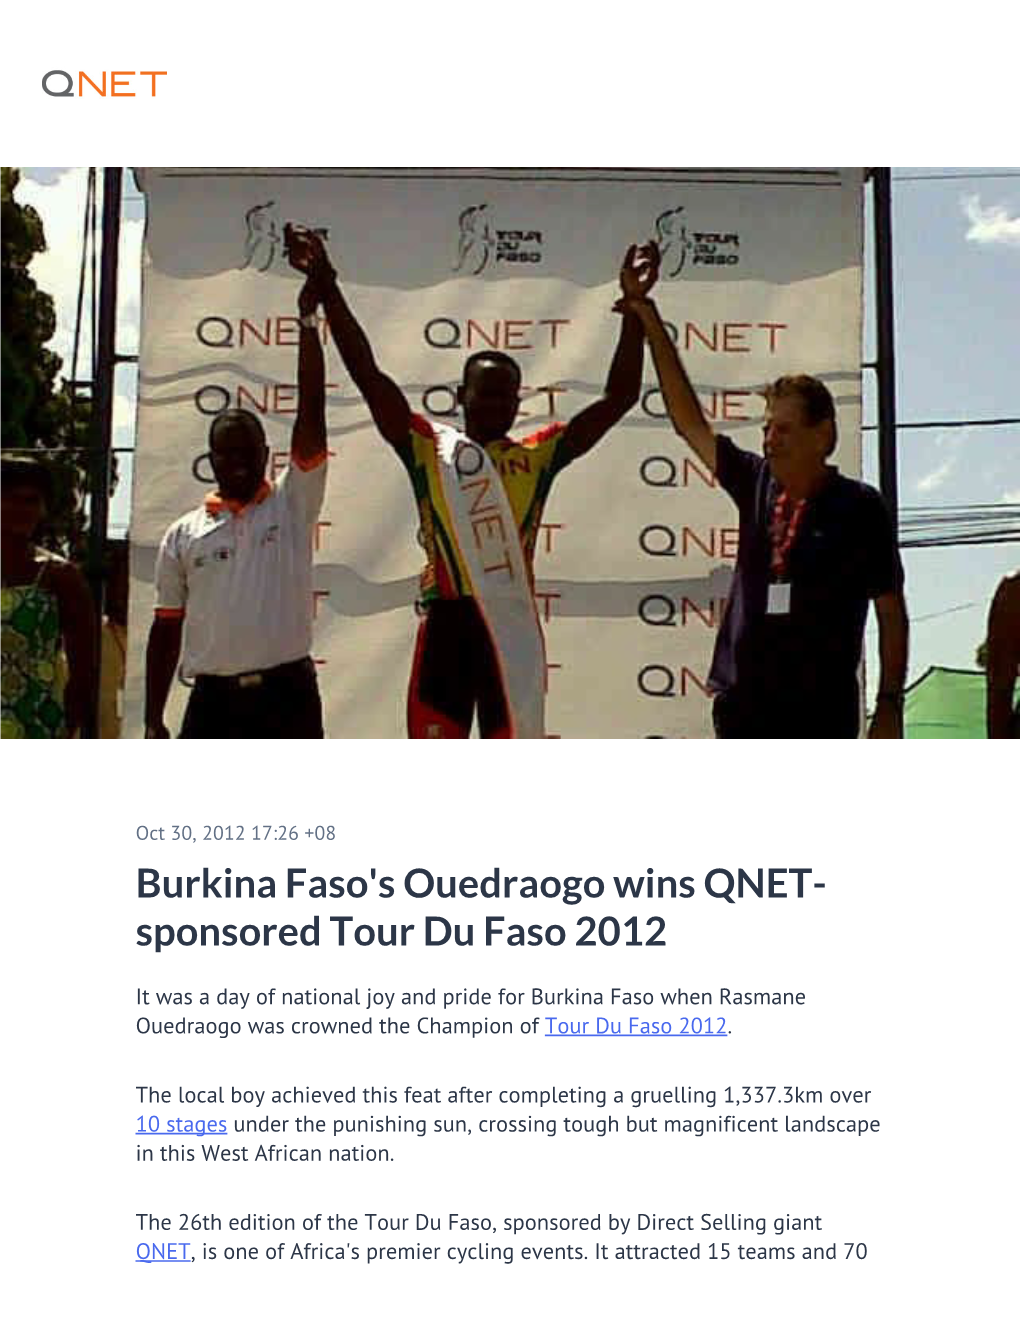 Burkina Faso's Ouedraogo Wins QNET-Sponsored Tour Du Faso 2012